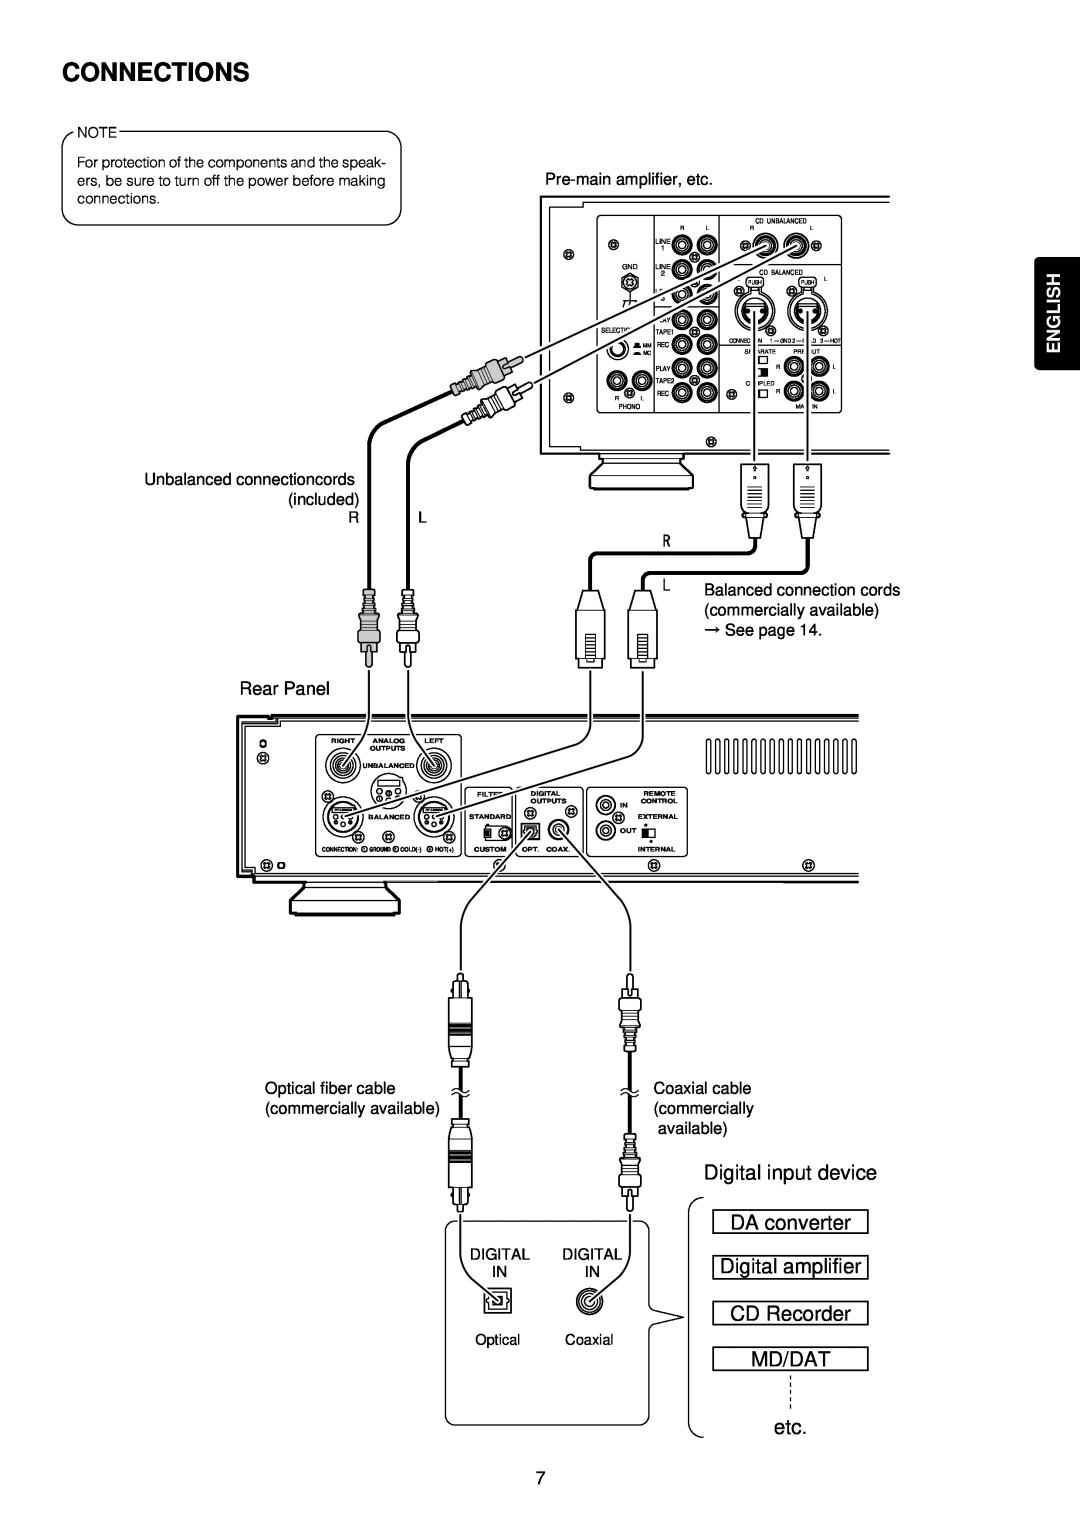 Marantz SA-14 manual Connections, DA converter, Digital amplifier, CD Recorder, Md/Dat, English, Line, TAPE1, TAPE2 